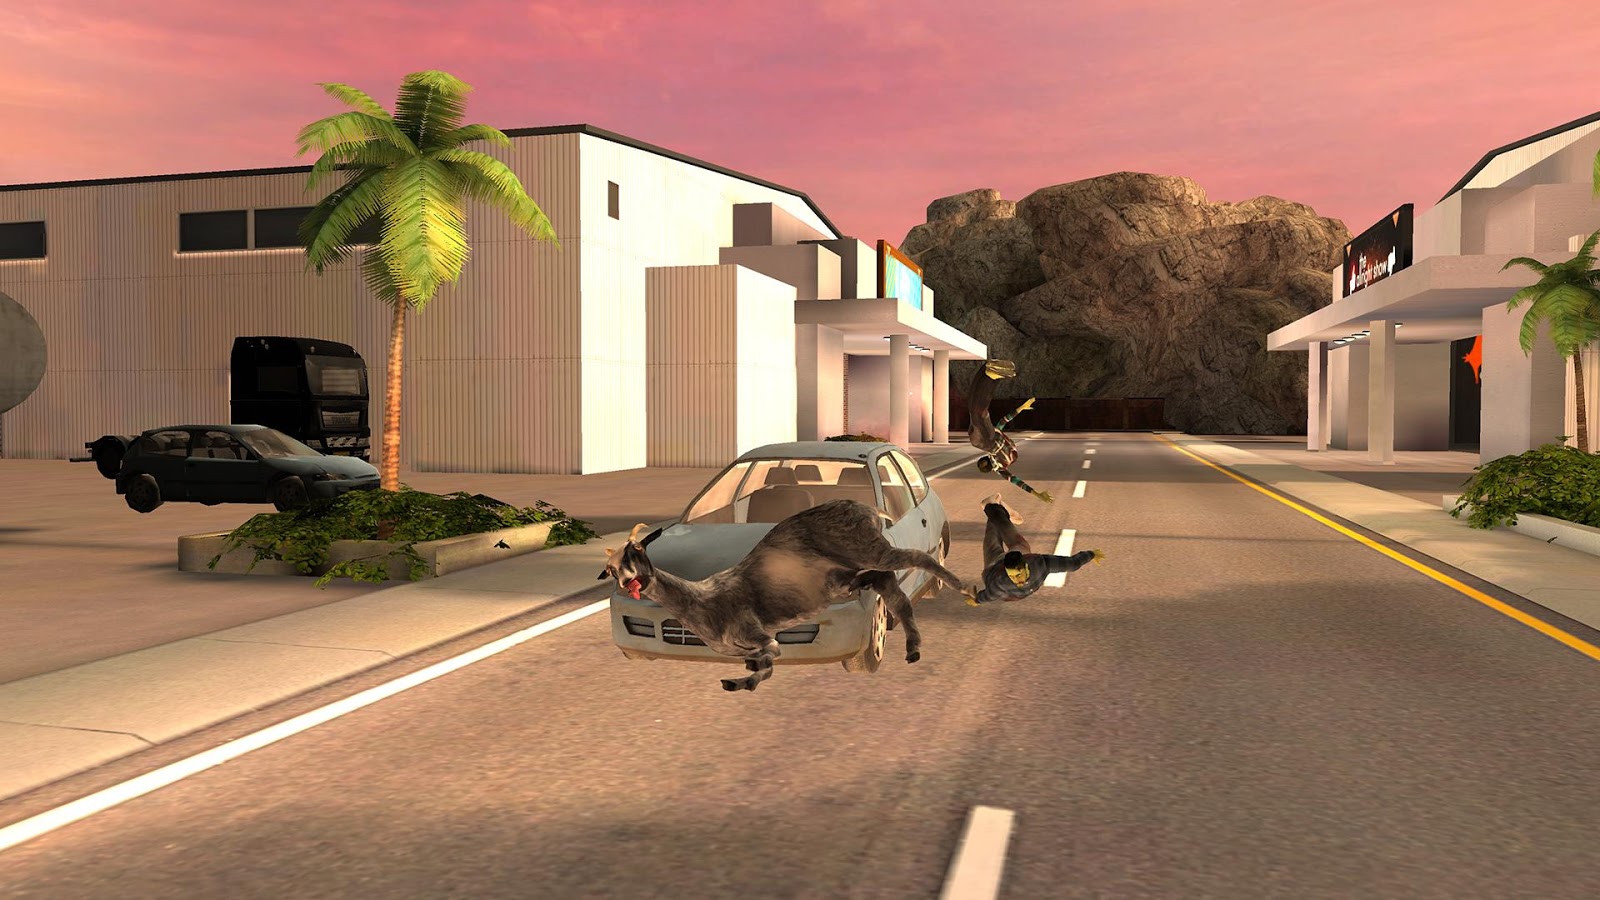 goat simulator appvn